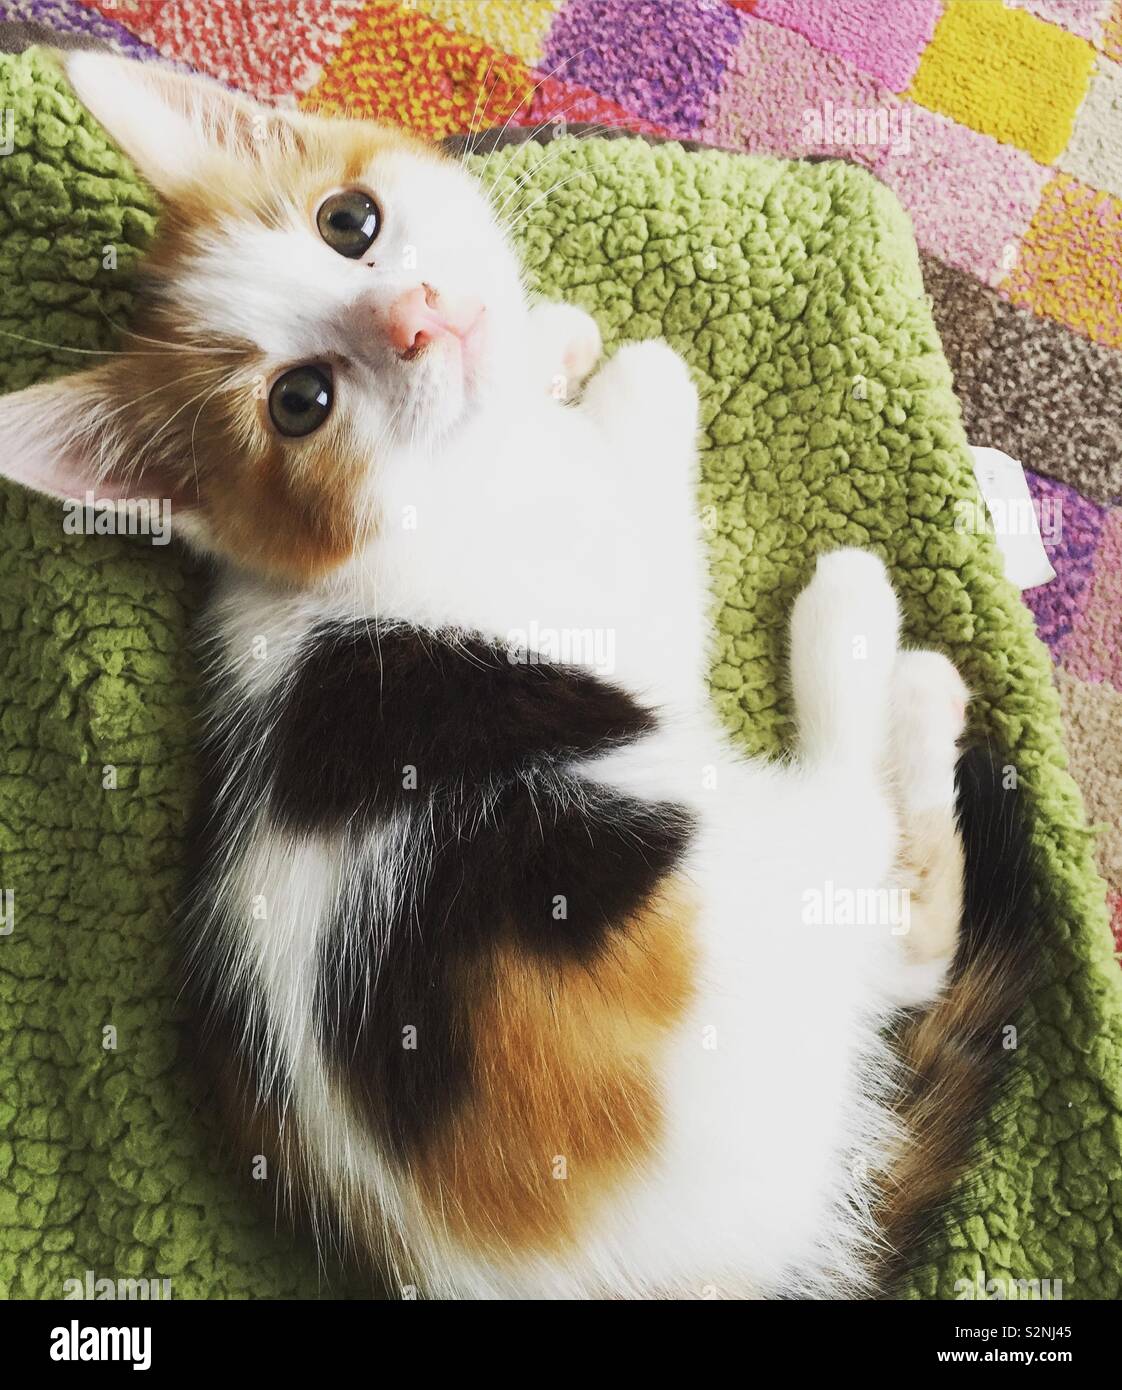 cute calico kittens